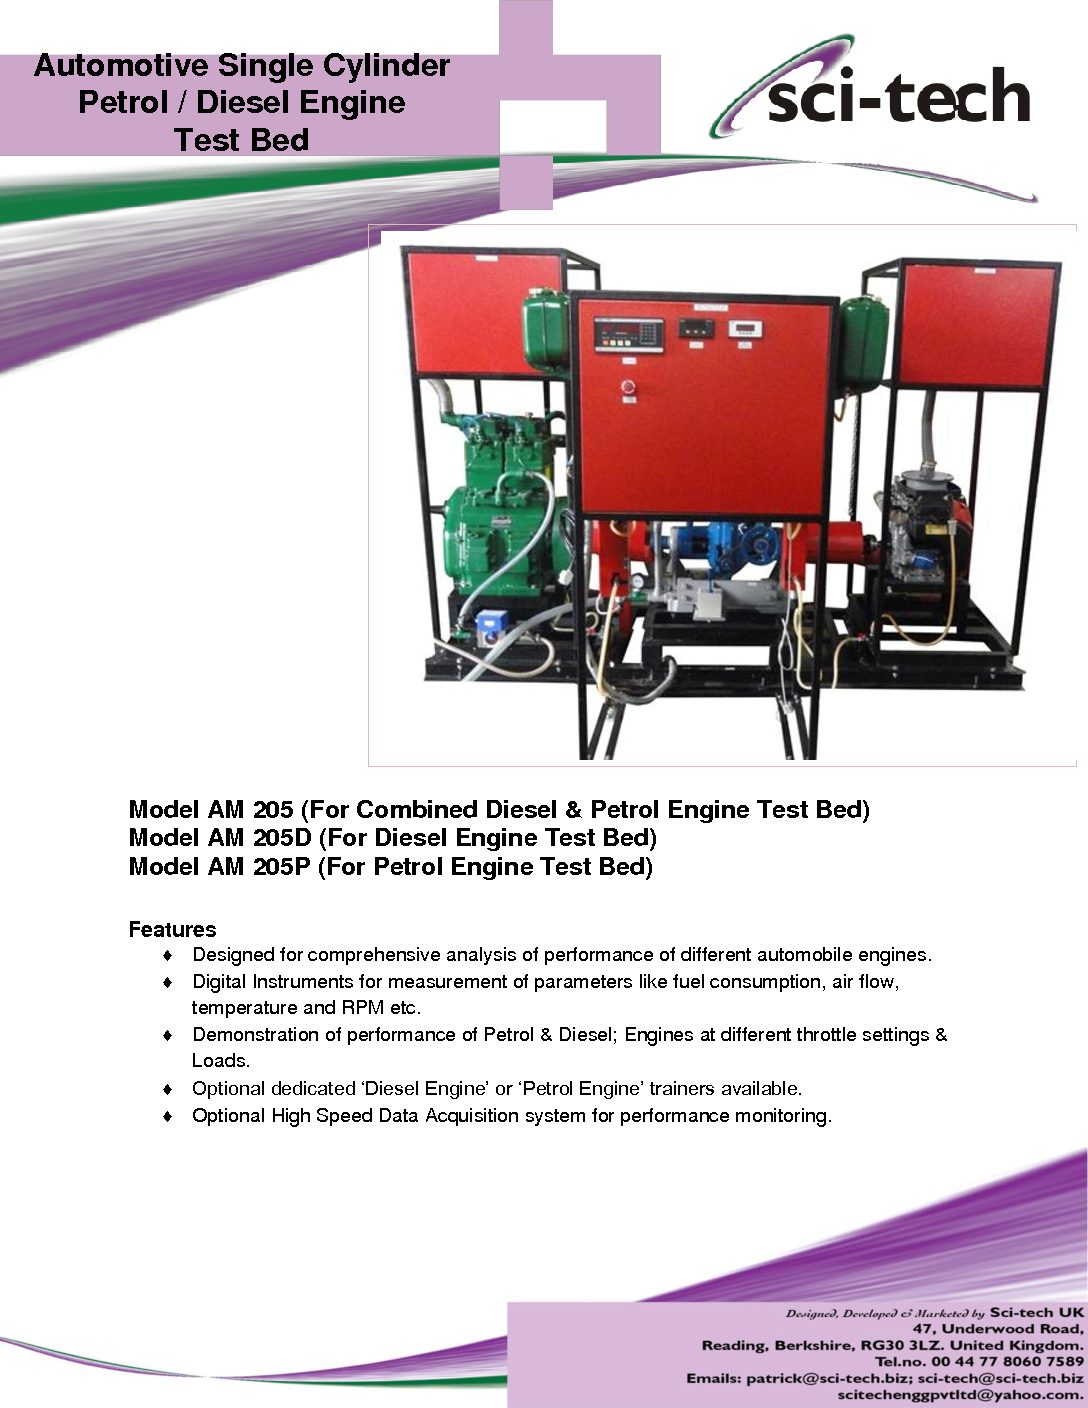 Automotive Single Cylinder Petrol / Diesel Engine Test Bed Model AM 205 Series